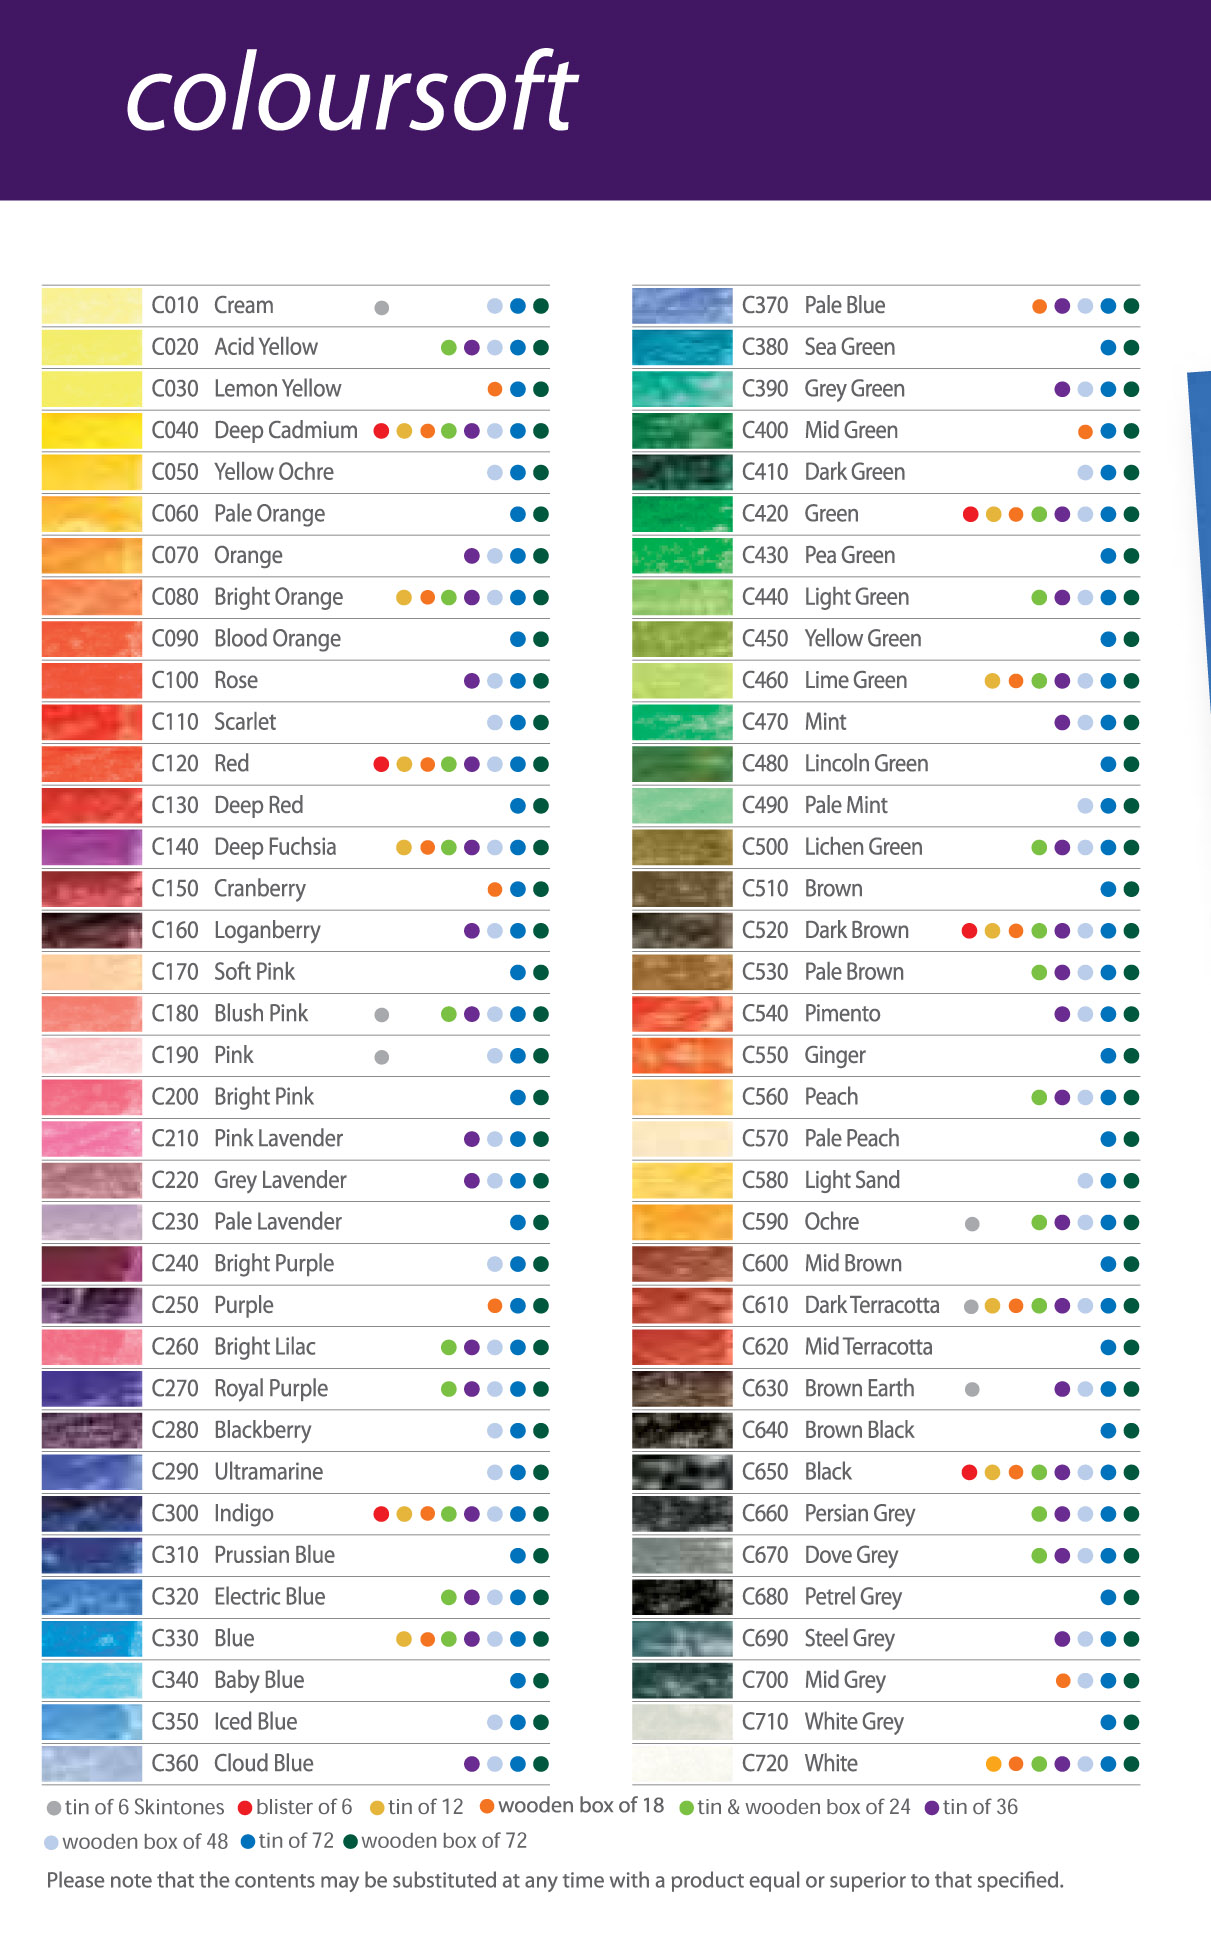 Colored Pencil Chart